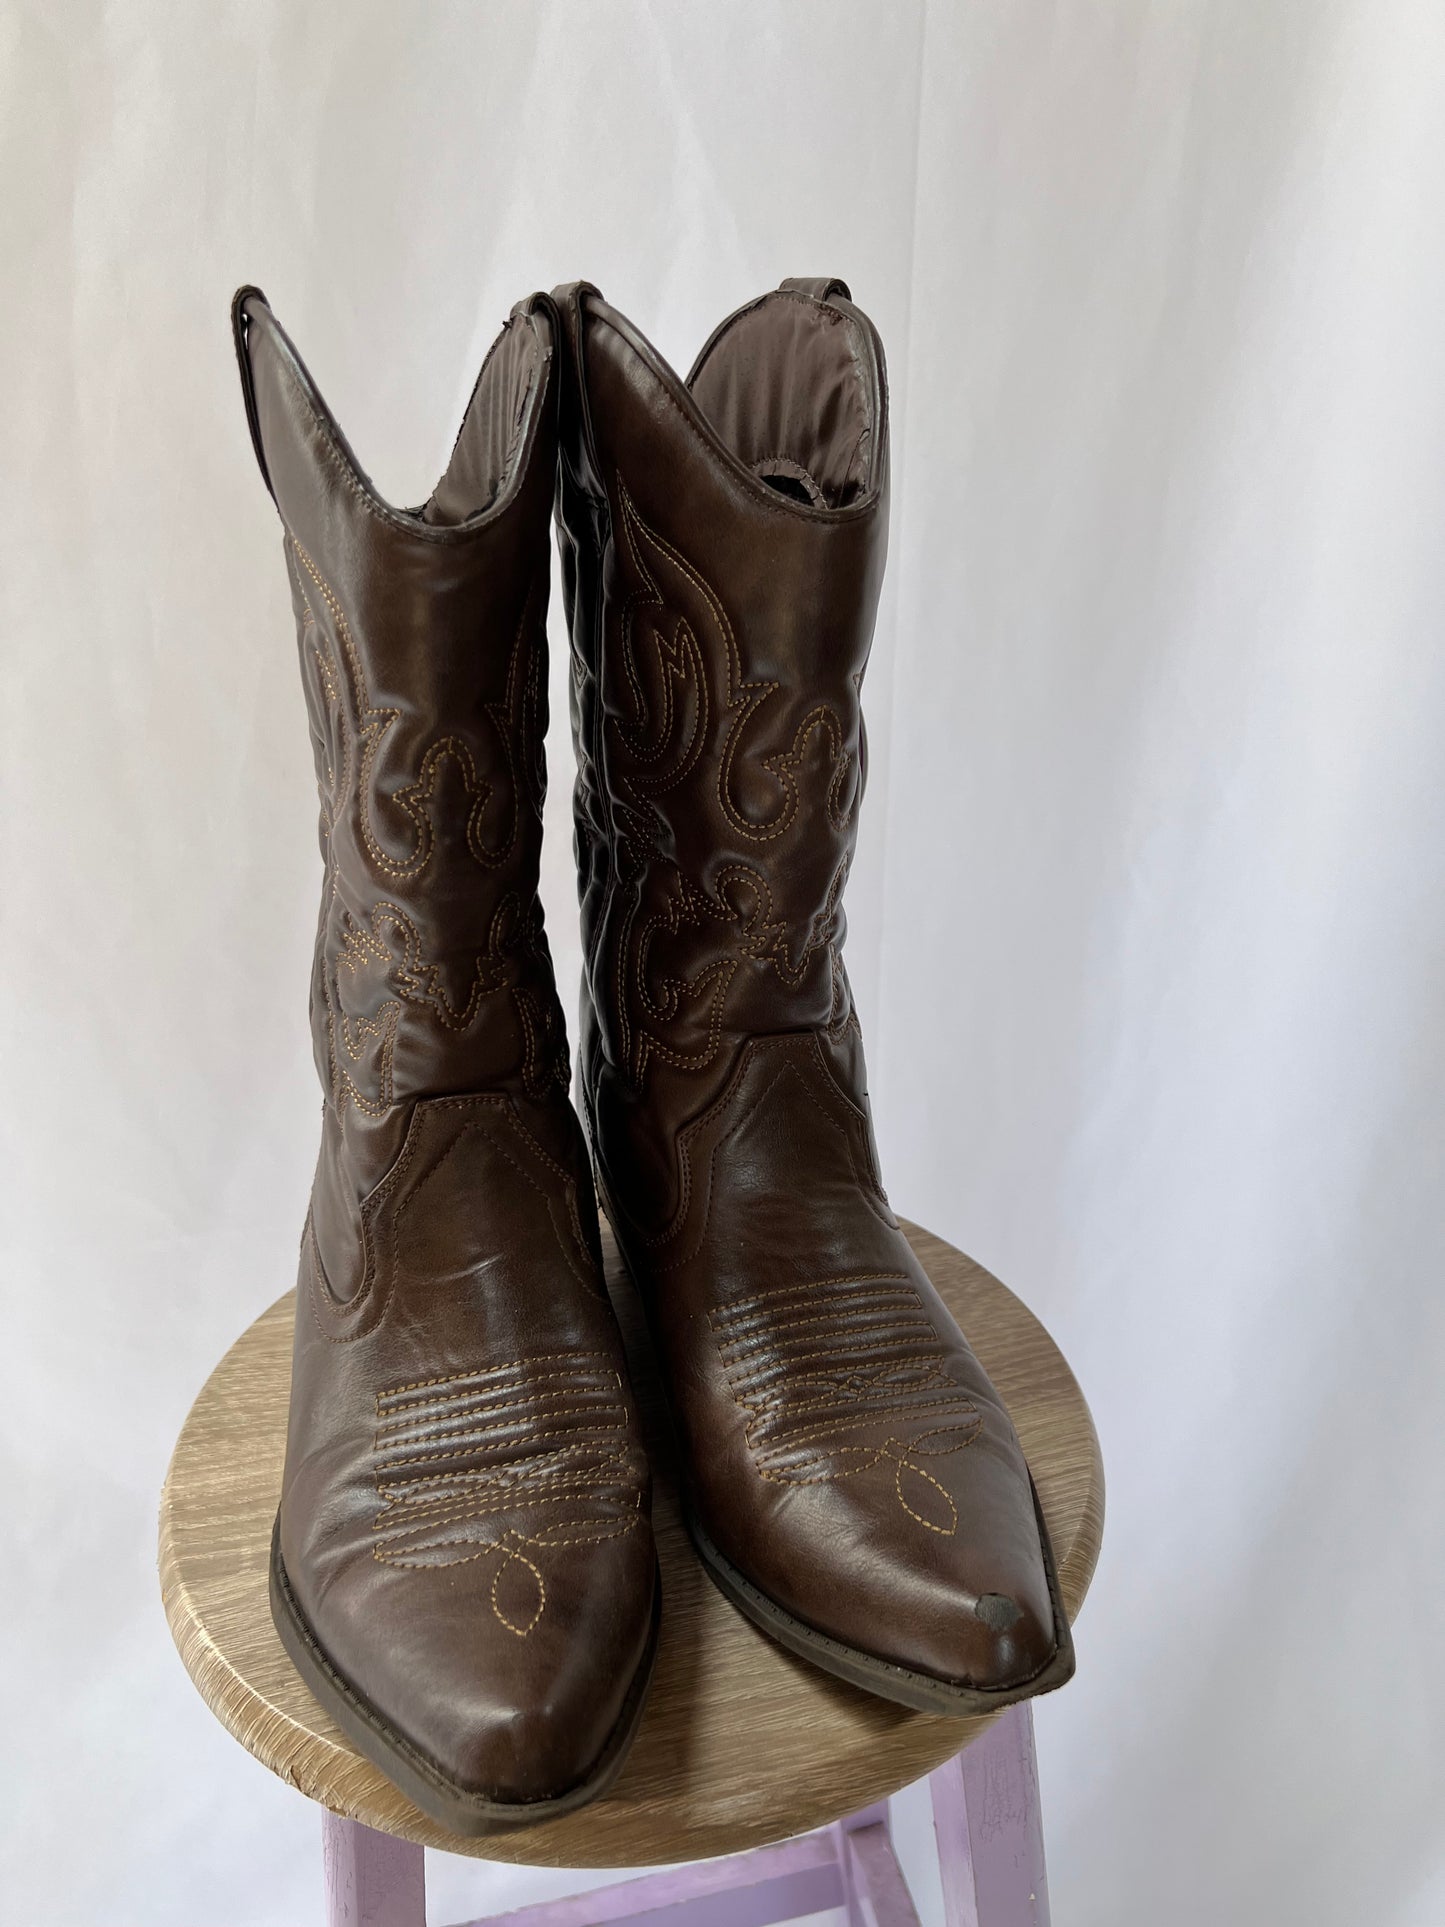 Brown Cowboy Boots - 7.5